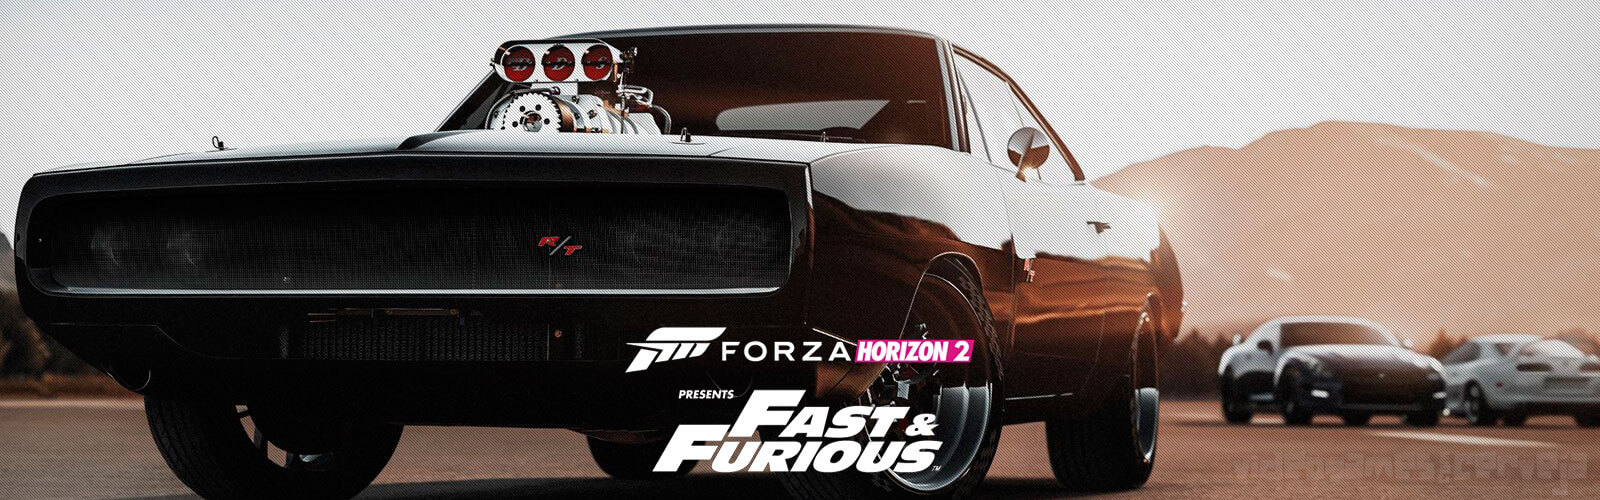 Análise - Forza Horizon 2: Fast & Furious Cover